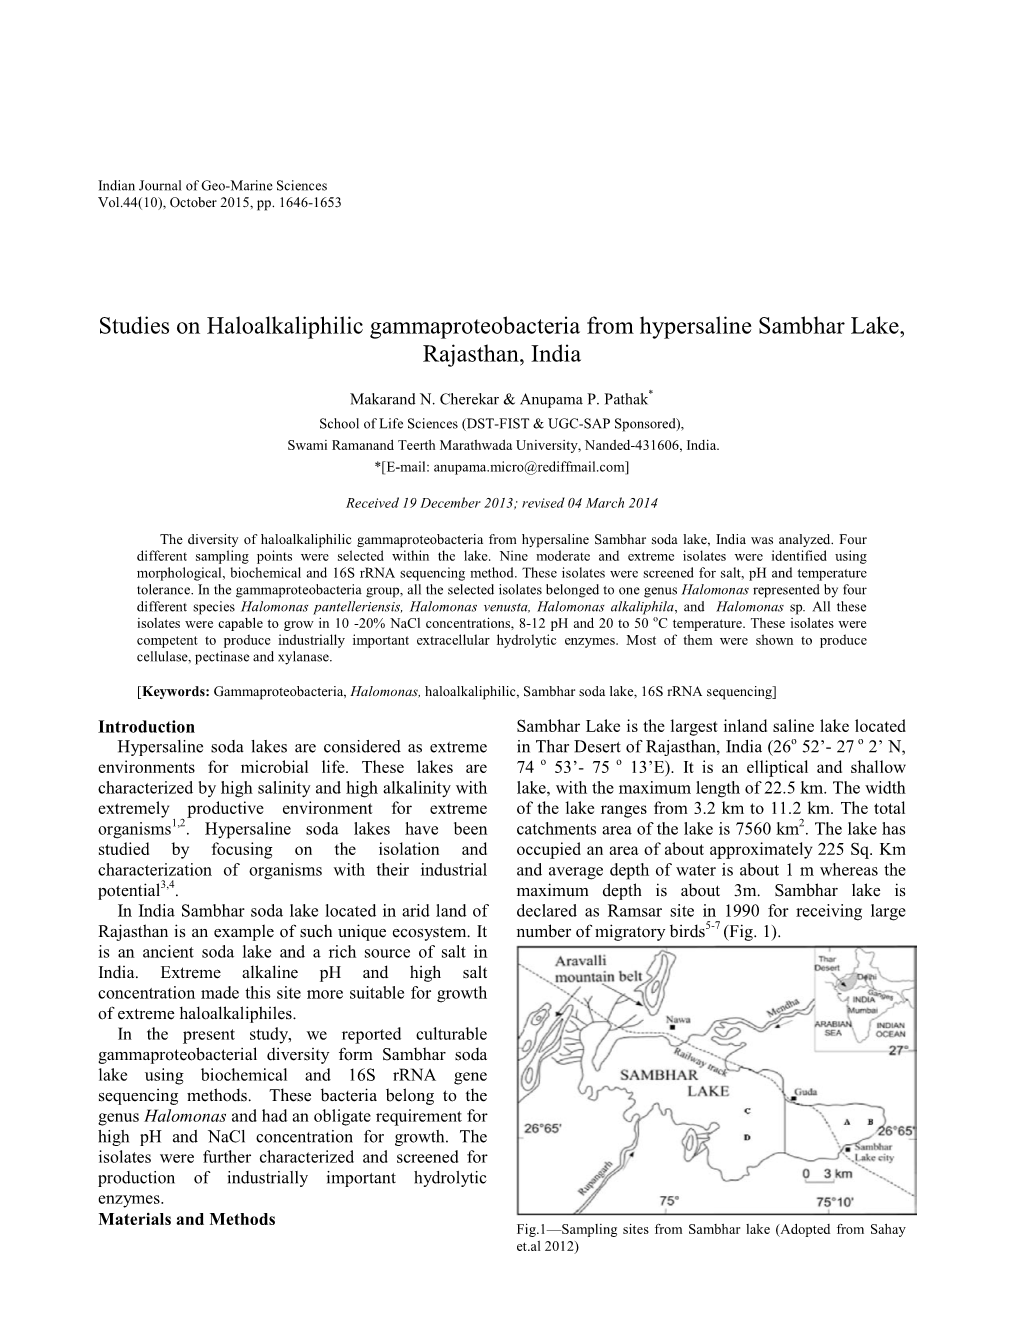 Studies on Haloalkaliphilic Gammaproteobacteria from Hypersaline Sambhar Lake, Rajasthan, India